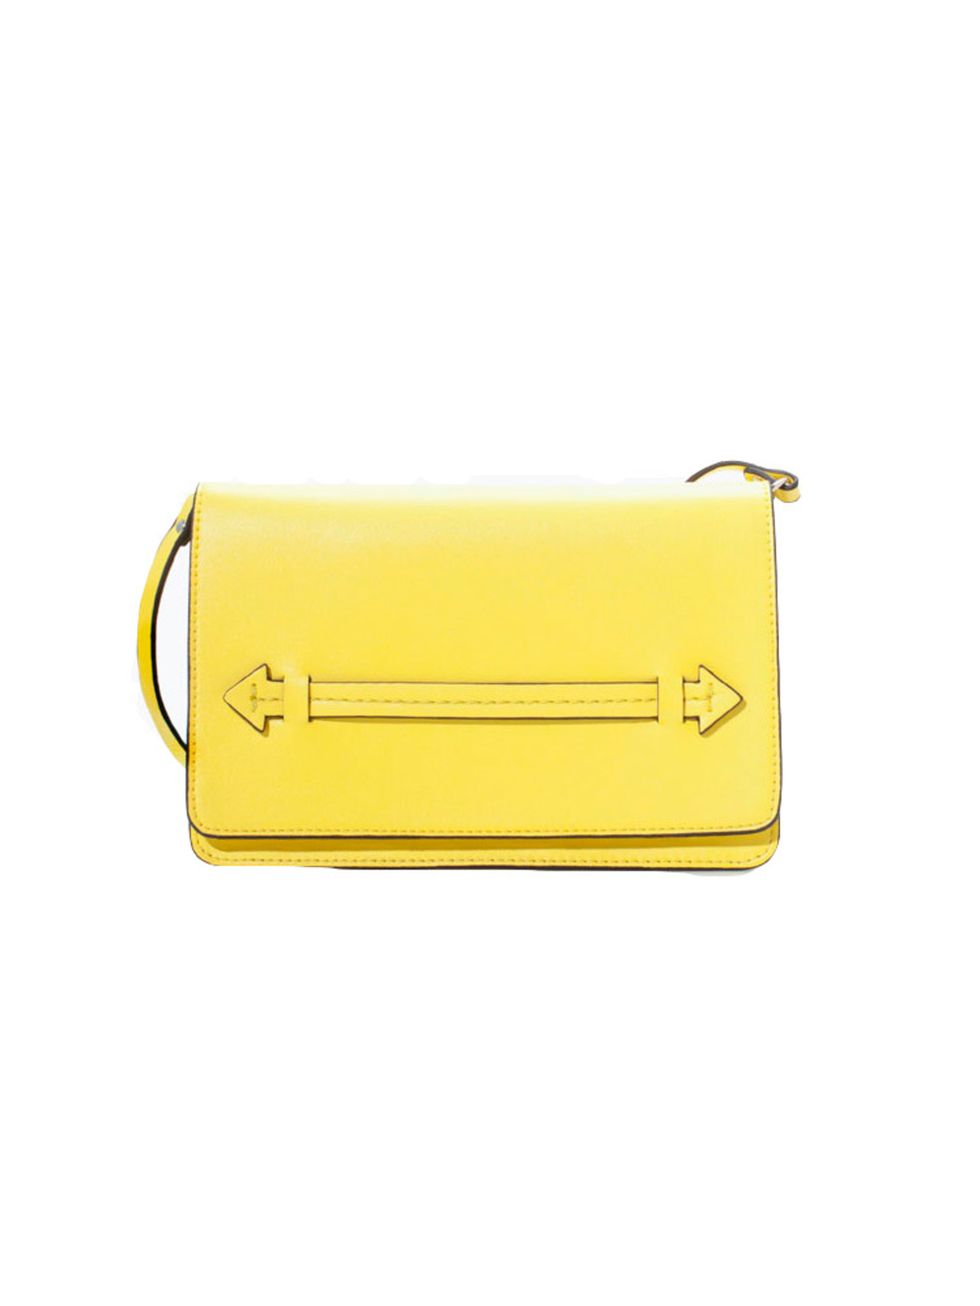 <p><a href="http://www.zara.com/uk/en/trf/handbags/gusseted-clutch-c269223p2004690.html">Zara</a> yellow leather bag, £19.99</p>